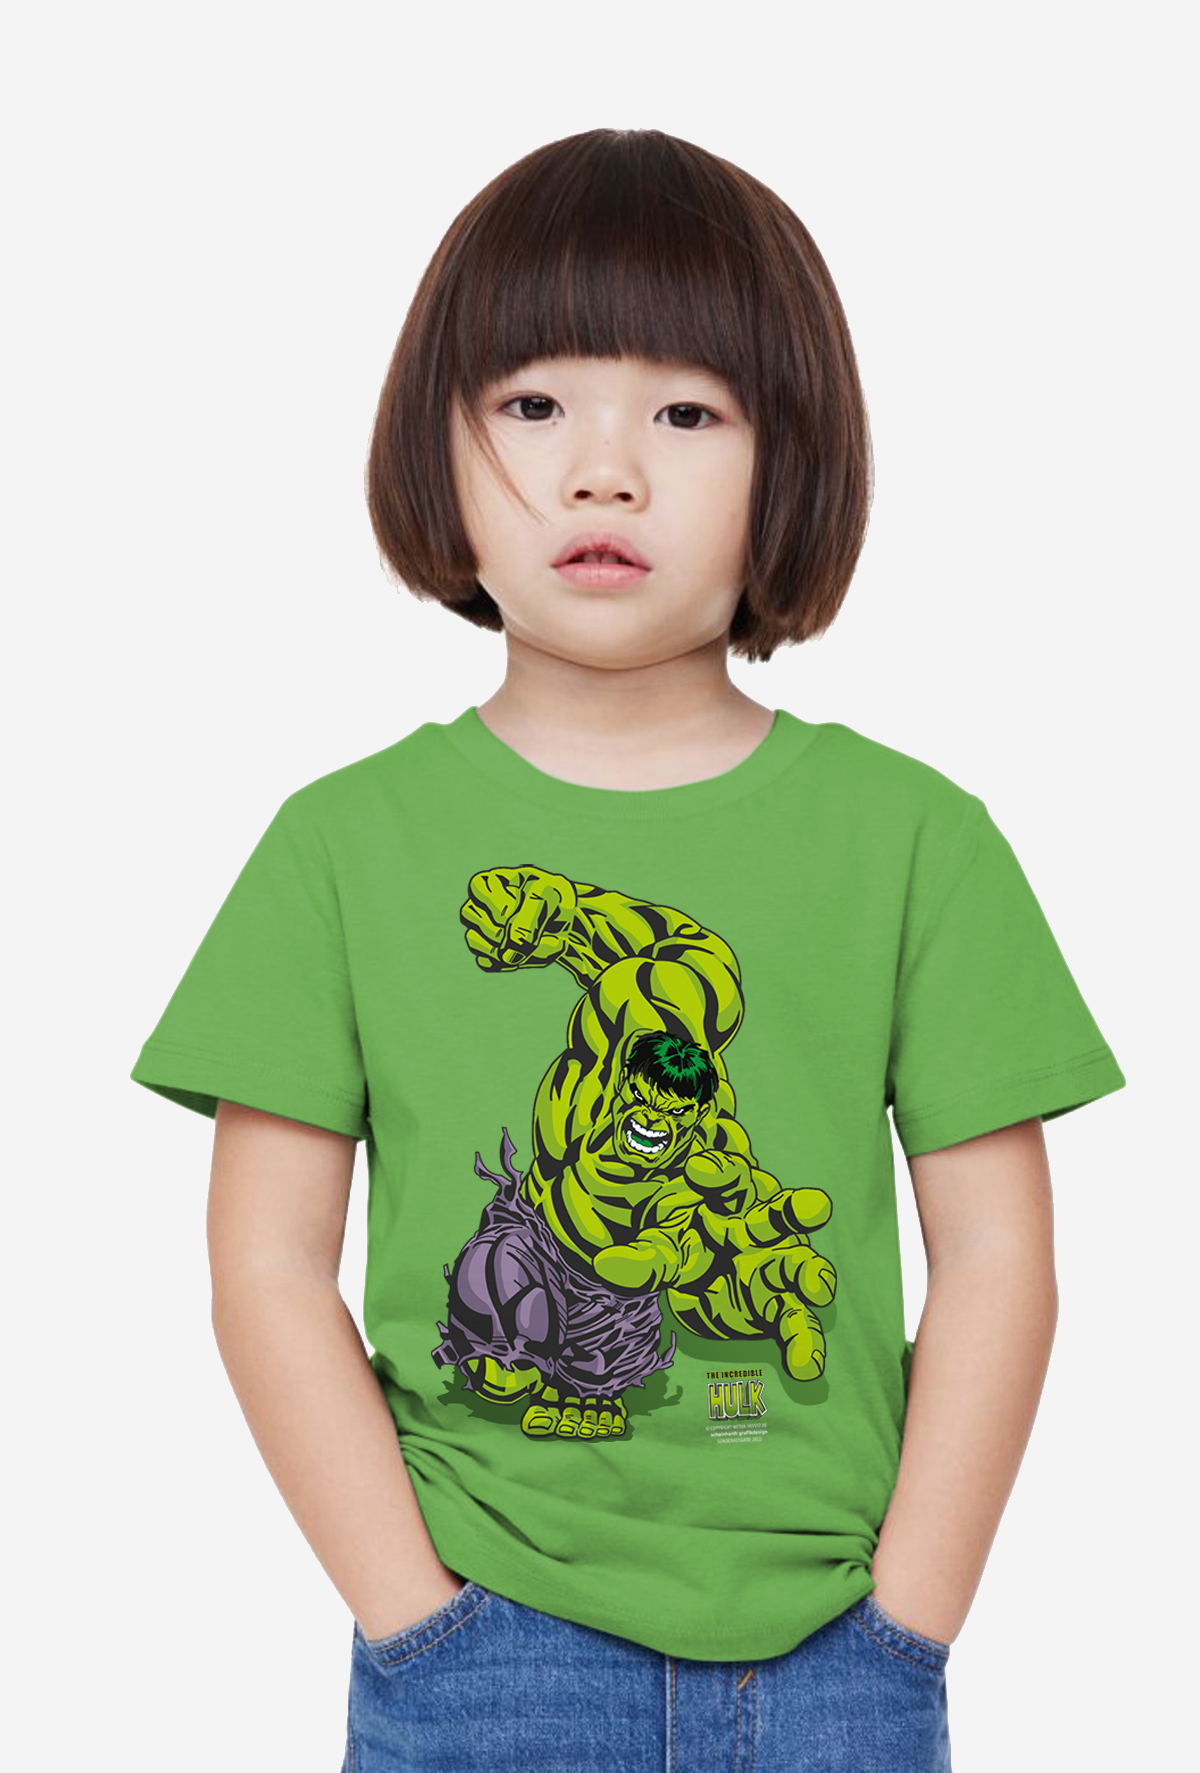 Kind in T-Shirt Hulk